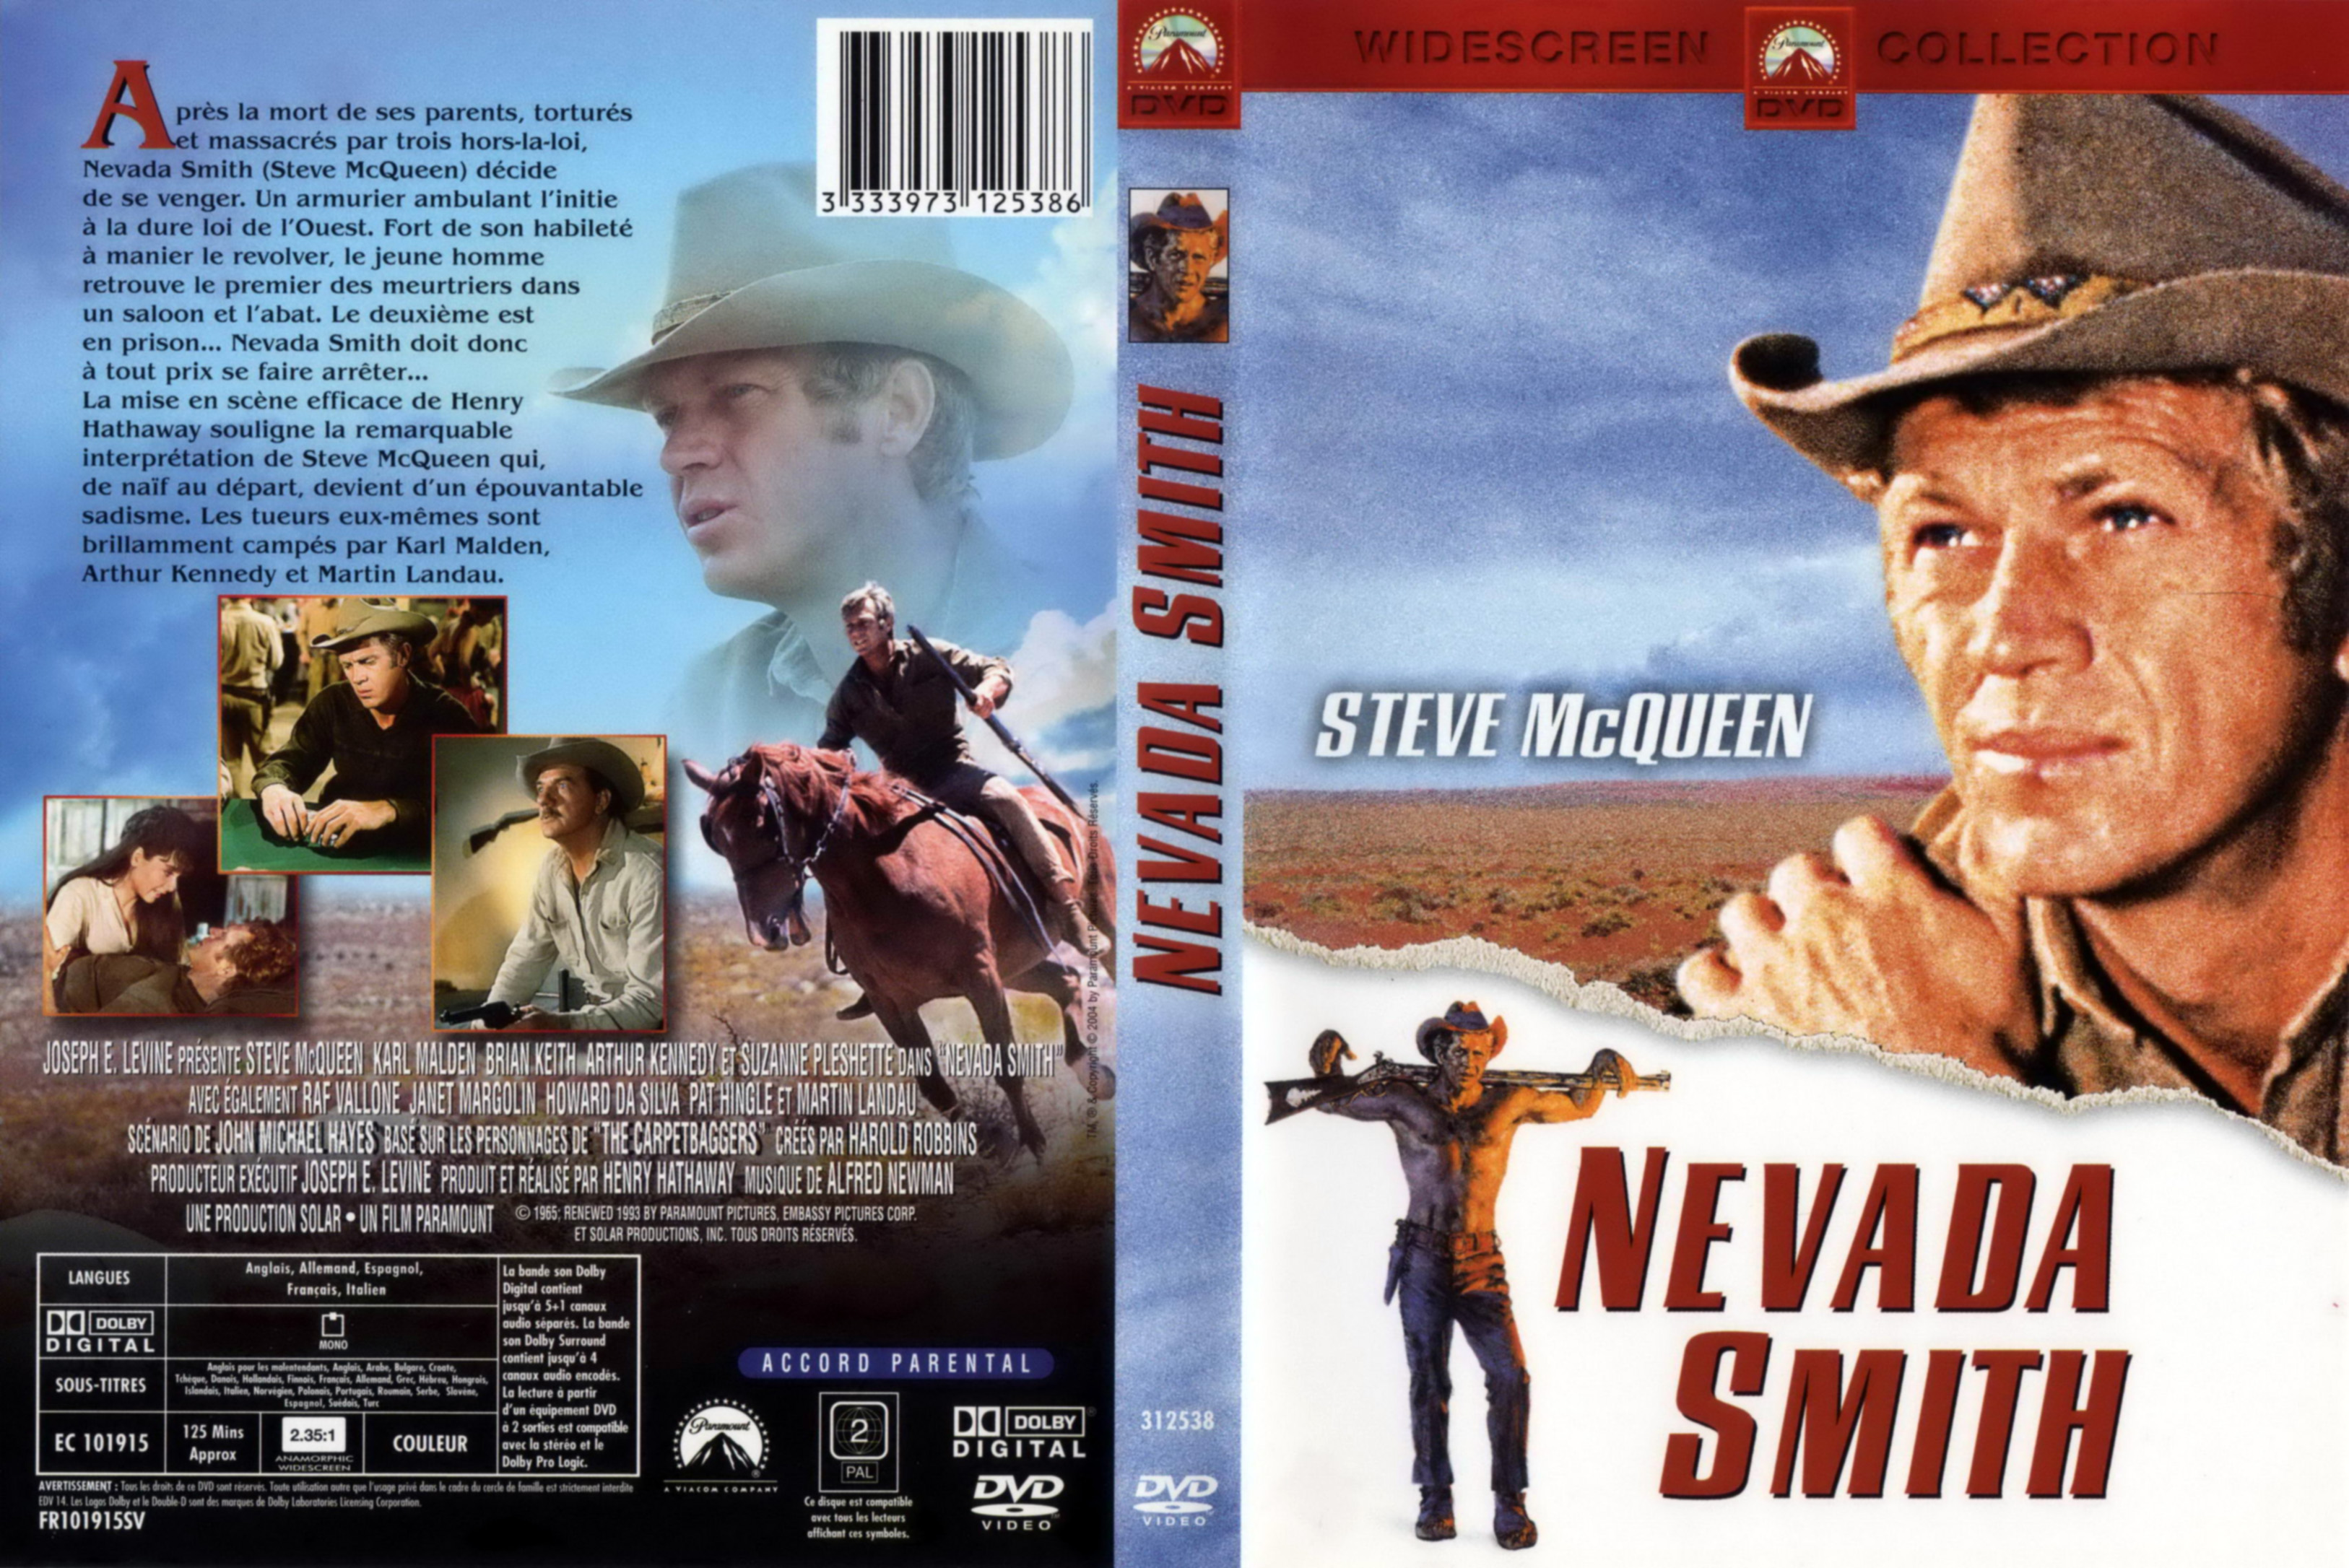 Jaquette DVD Nevada Smith